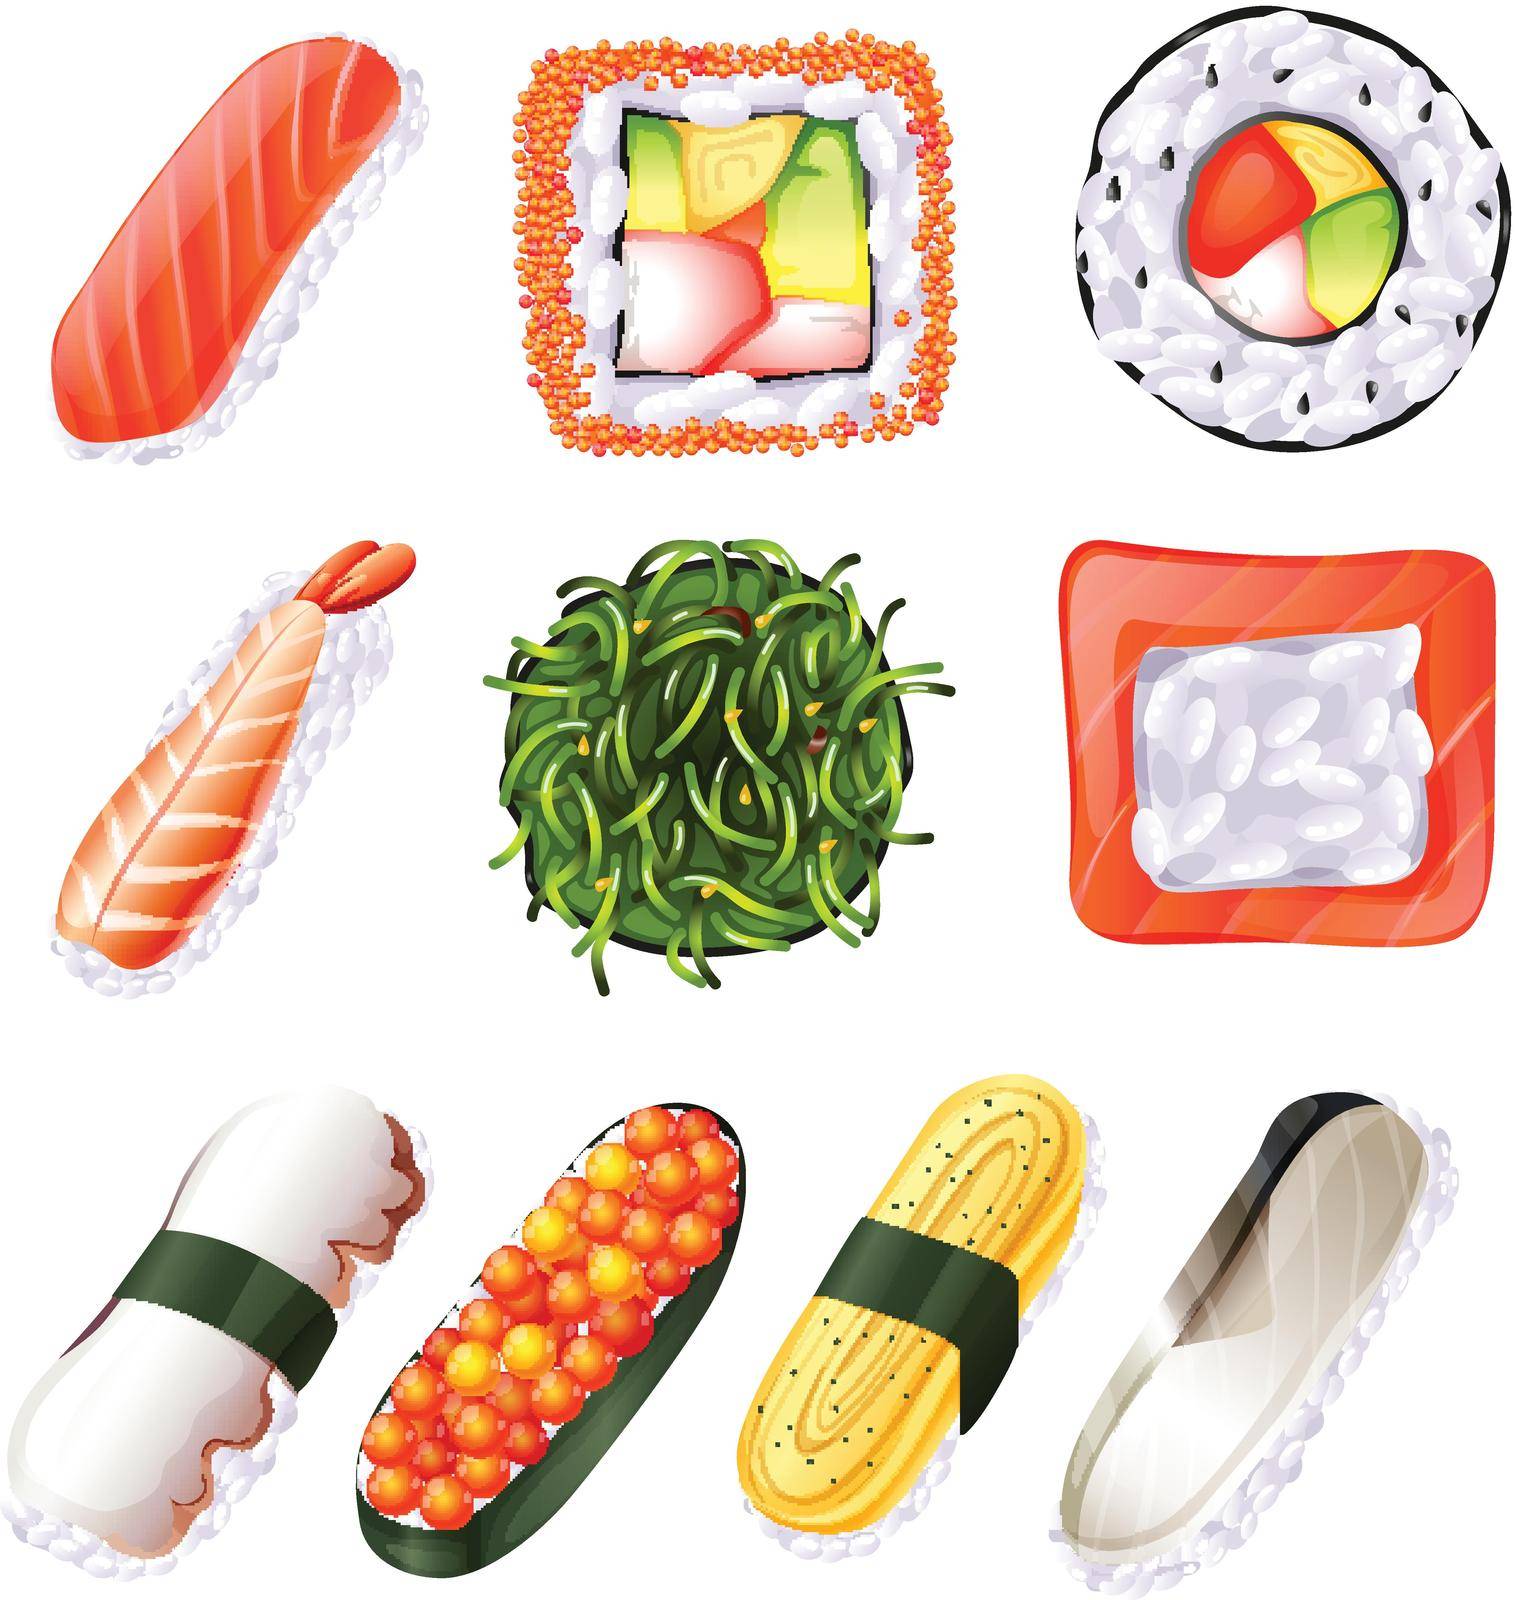 Illustration of a set of sushi on a white background